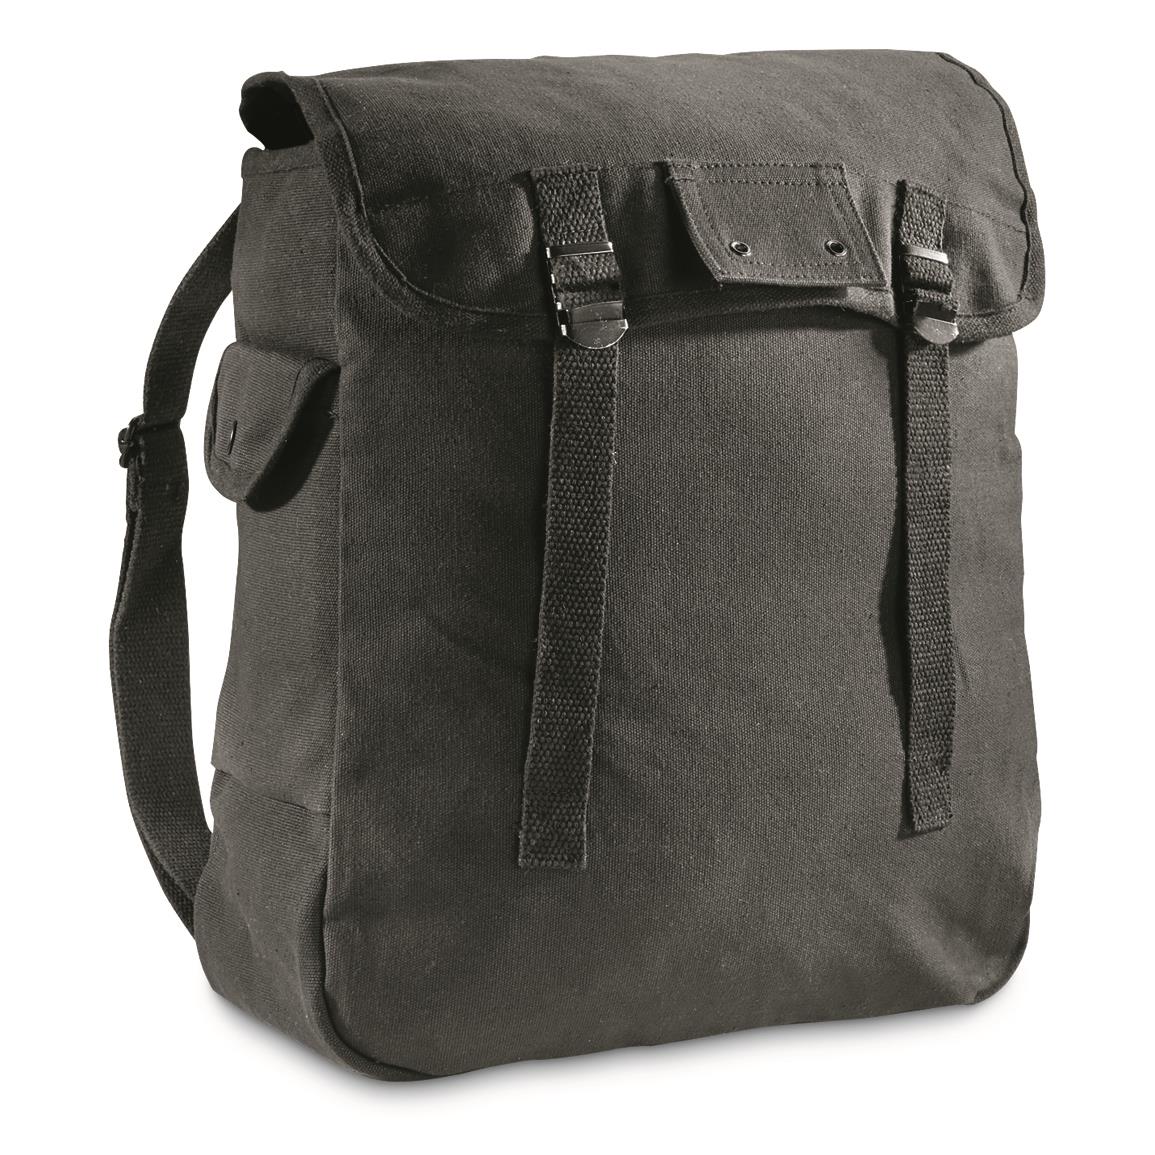 Red Rock Outdoor Gear Sidekick Sling Bag - 299878, Military Style Backpacks & Bags at Sportsman ...